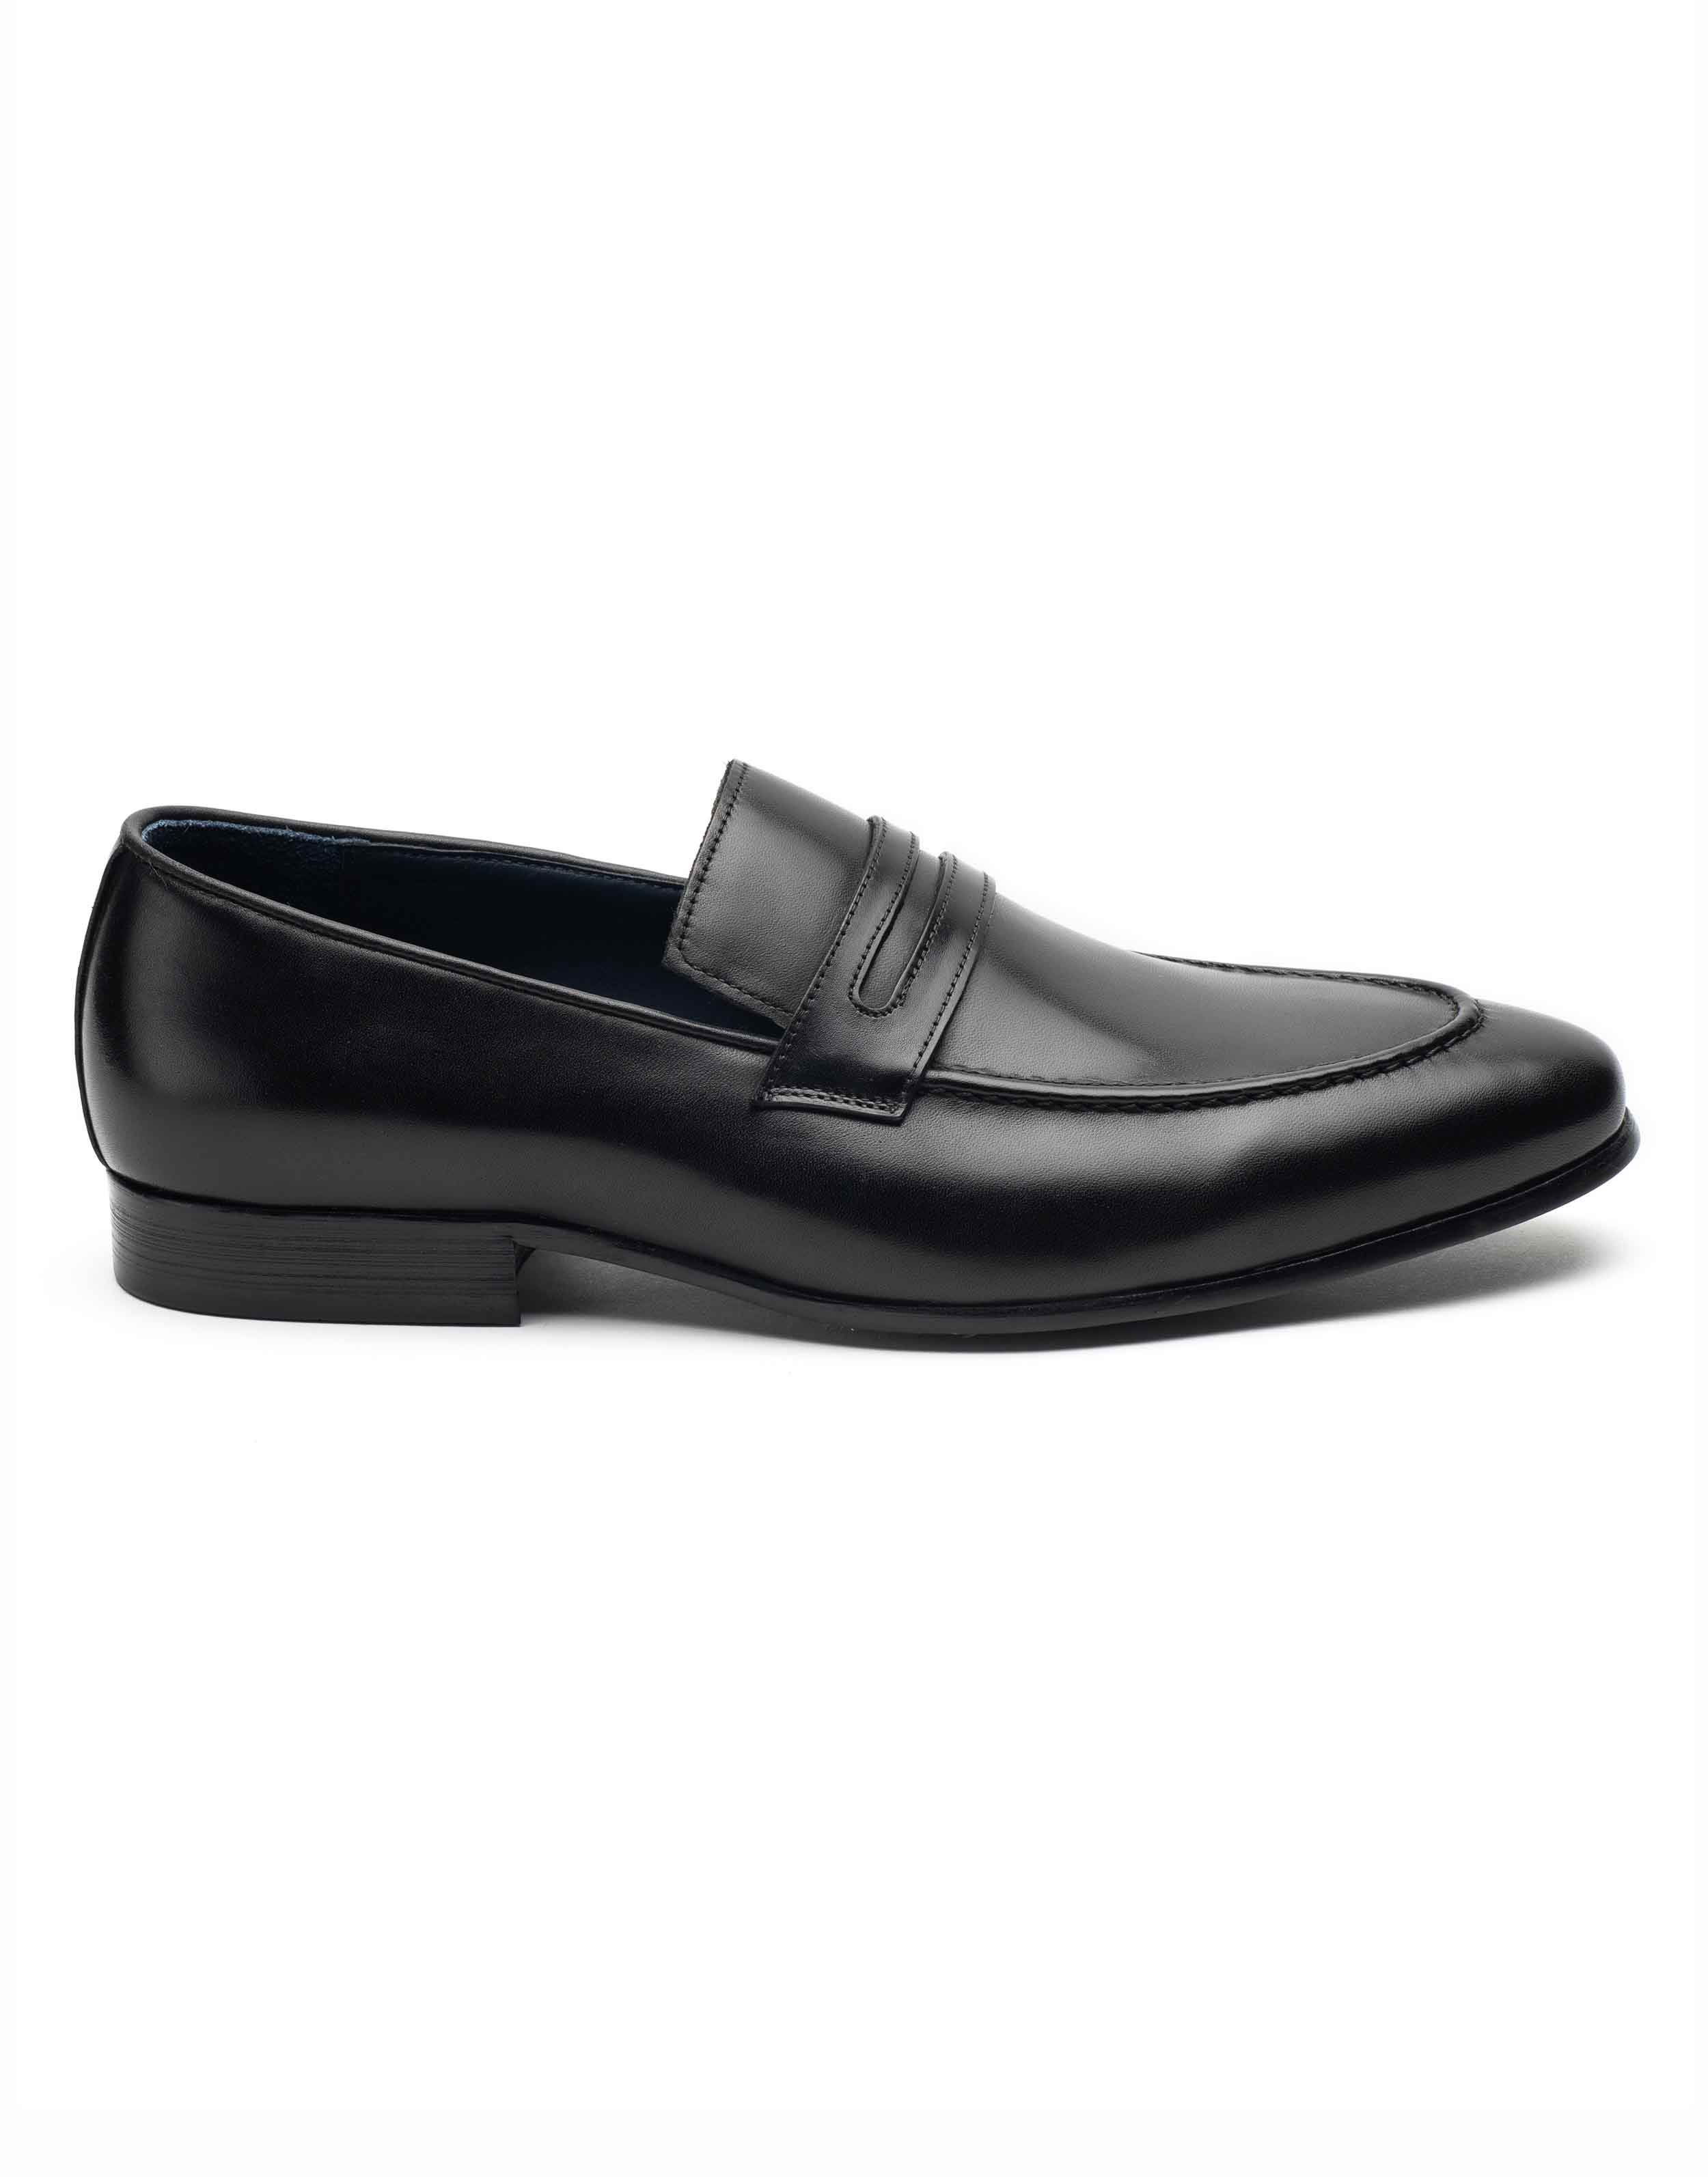 Black Classic Men's Casual Shoes MCSJS30 Dress Leather Derby Shoes | Touchy  Style